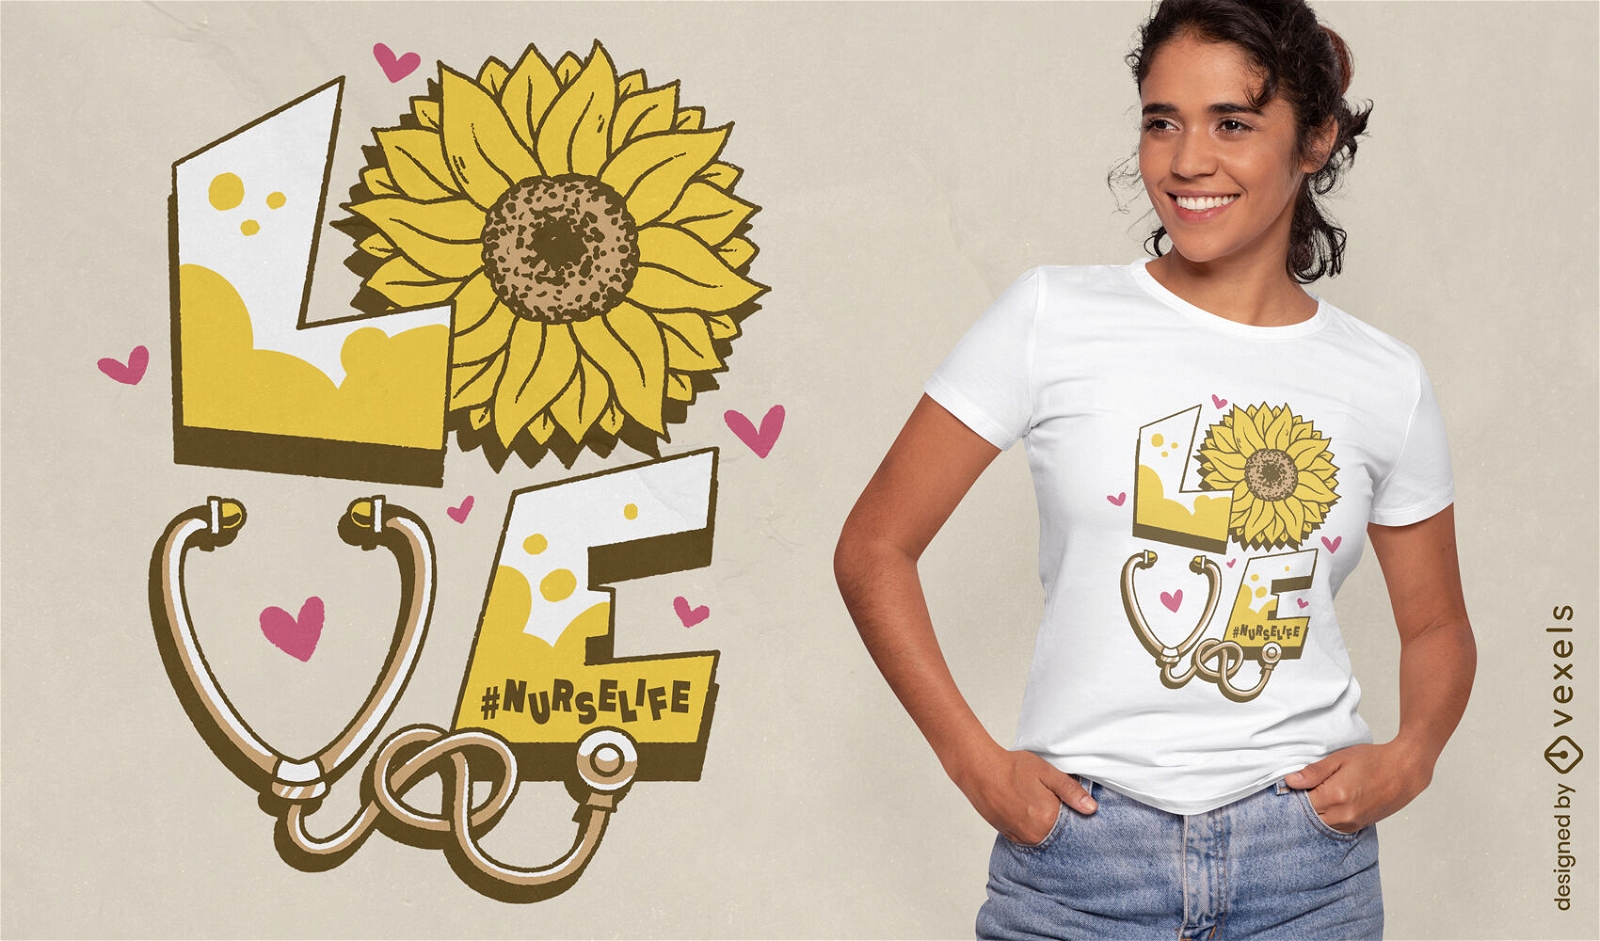 Sunflower love quote t-shirt design